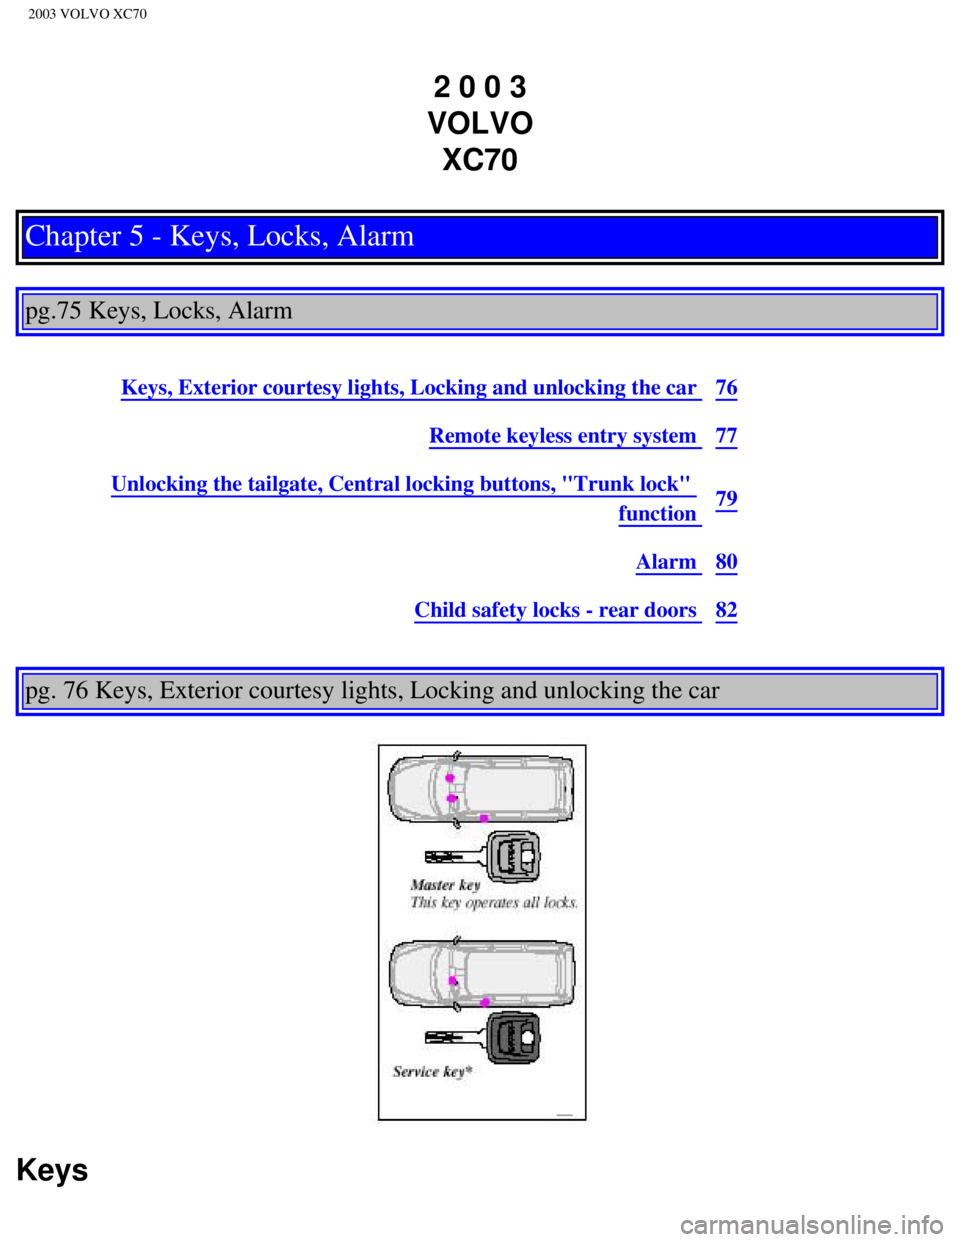 VOLVO XC70 2003  Owners Manual 
2003 VOLVO XC70
2 0 0 3  
VOLVO  XC70
Chapter 5 - Keys, Locks, Alarm
 
 
pg.75 Keys, Locks, Alarm 
 
Keys, Exterior courtesy lights, Locking and unlocking the car 76
Remote keyless entry system 77
Un